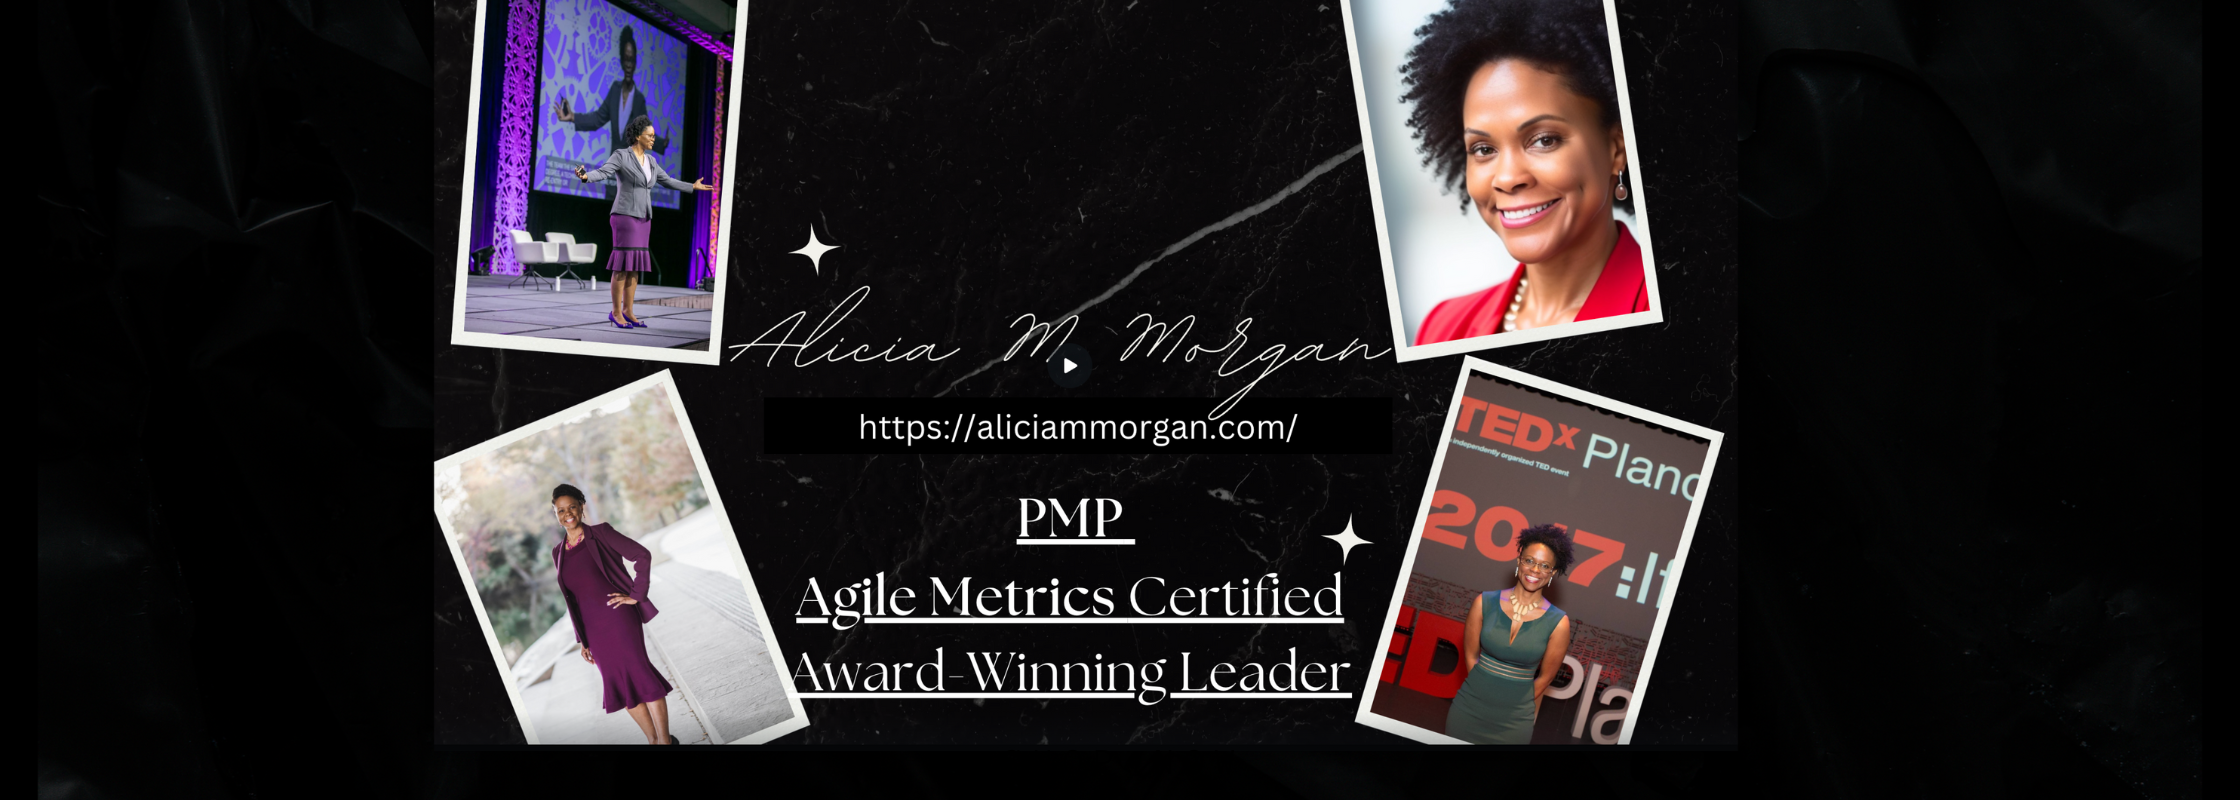 Empower Your Event: Book Alicia M. Morgan